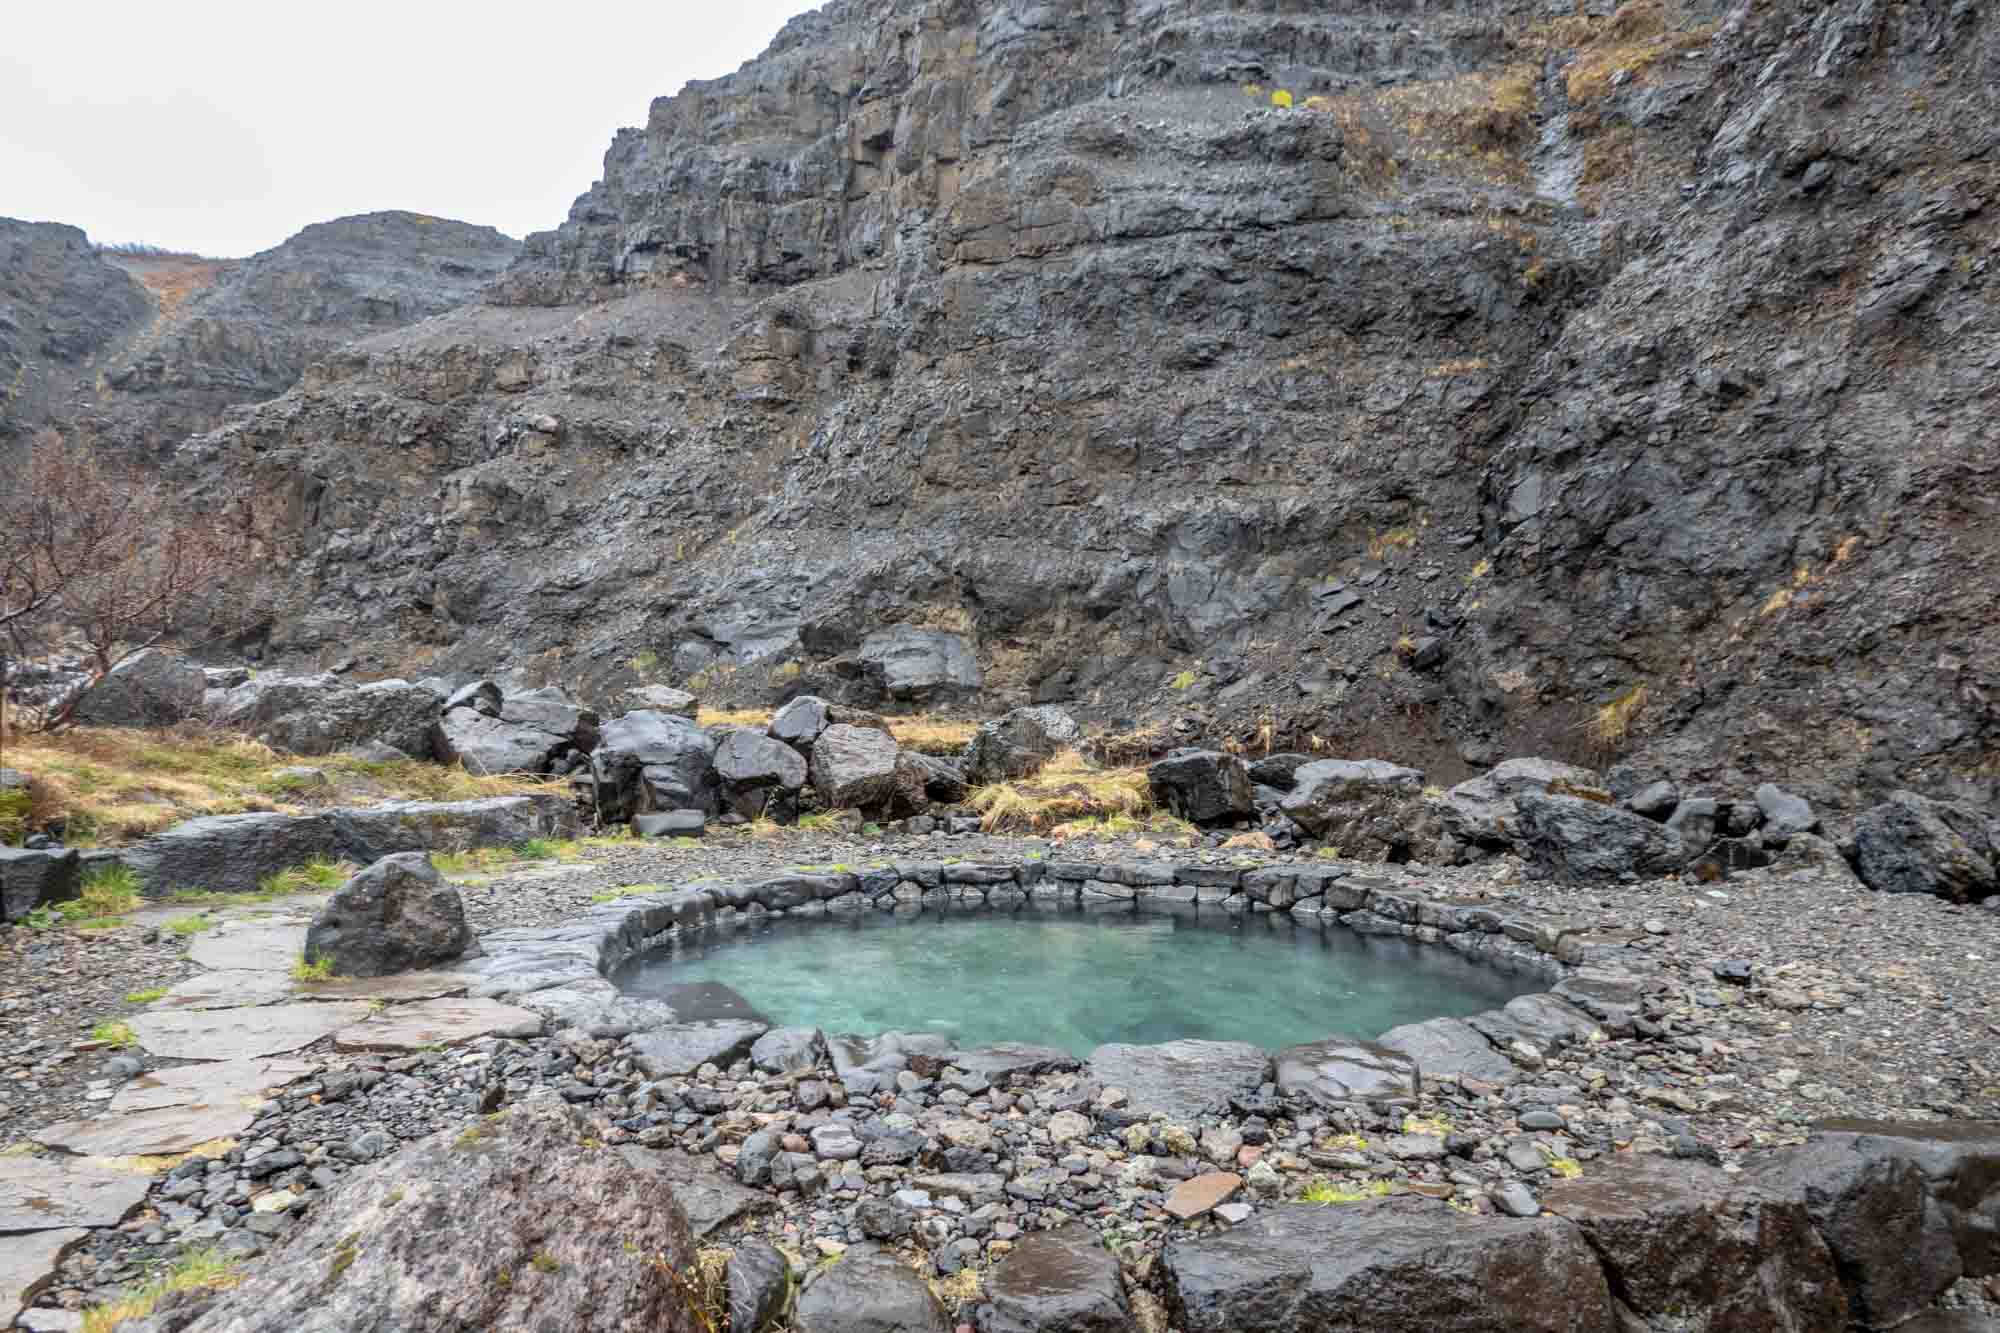 Circular hot springs pool in a canyon